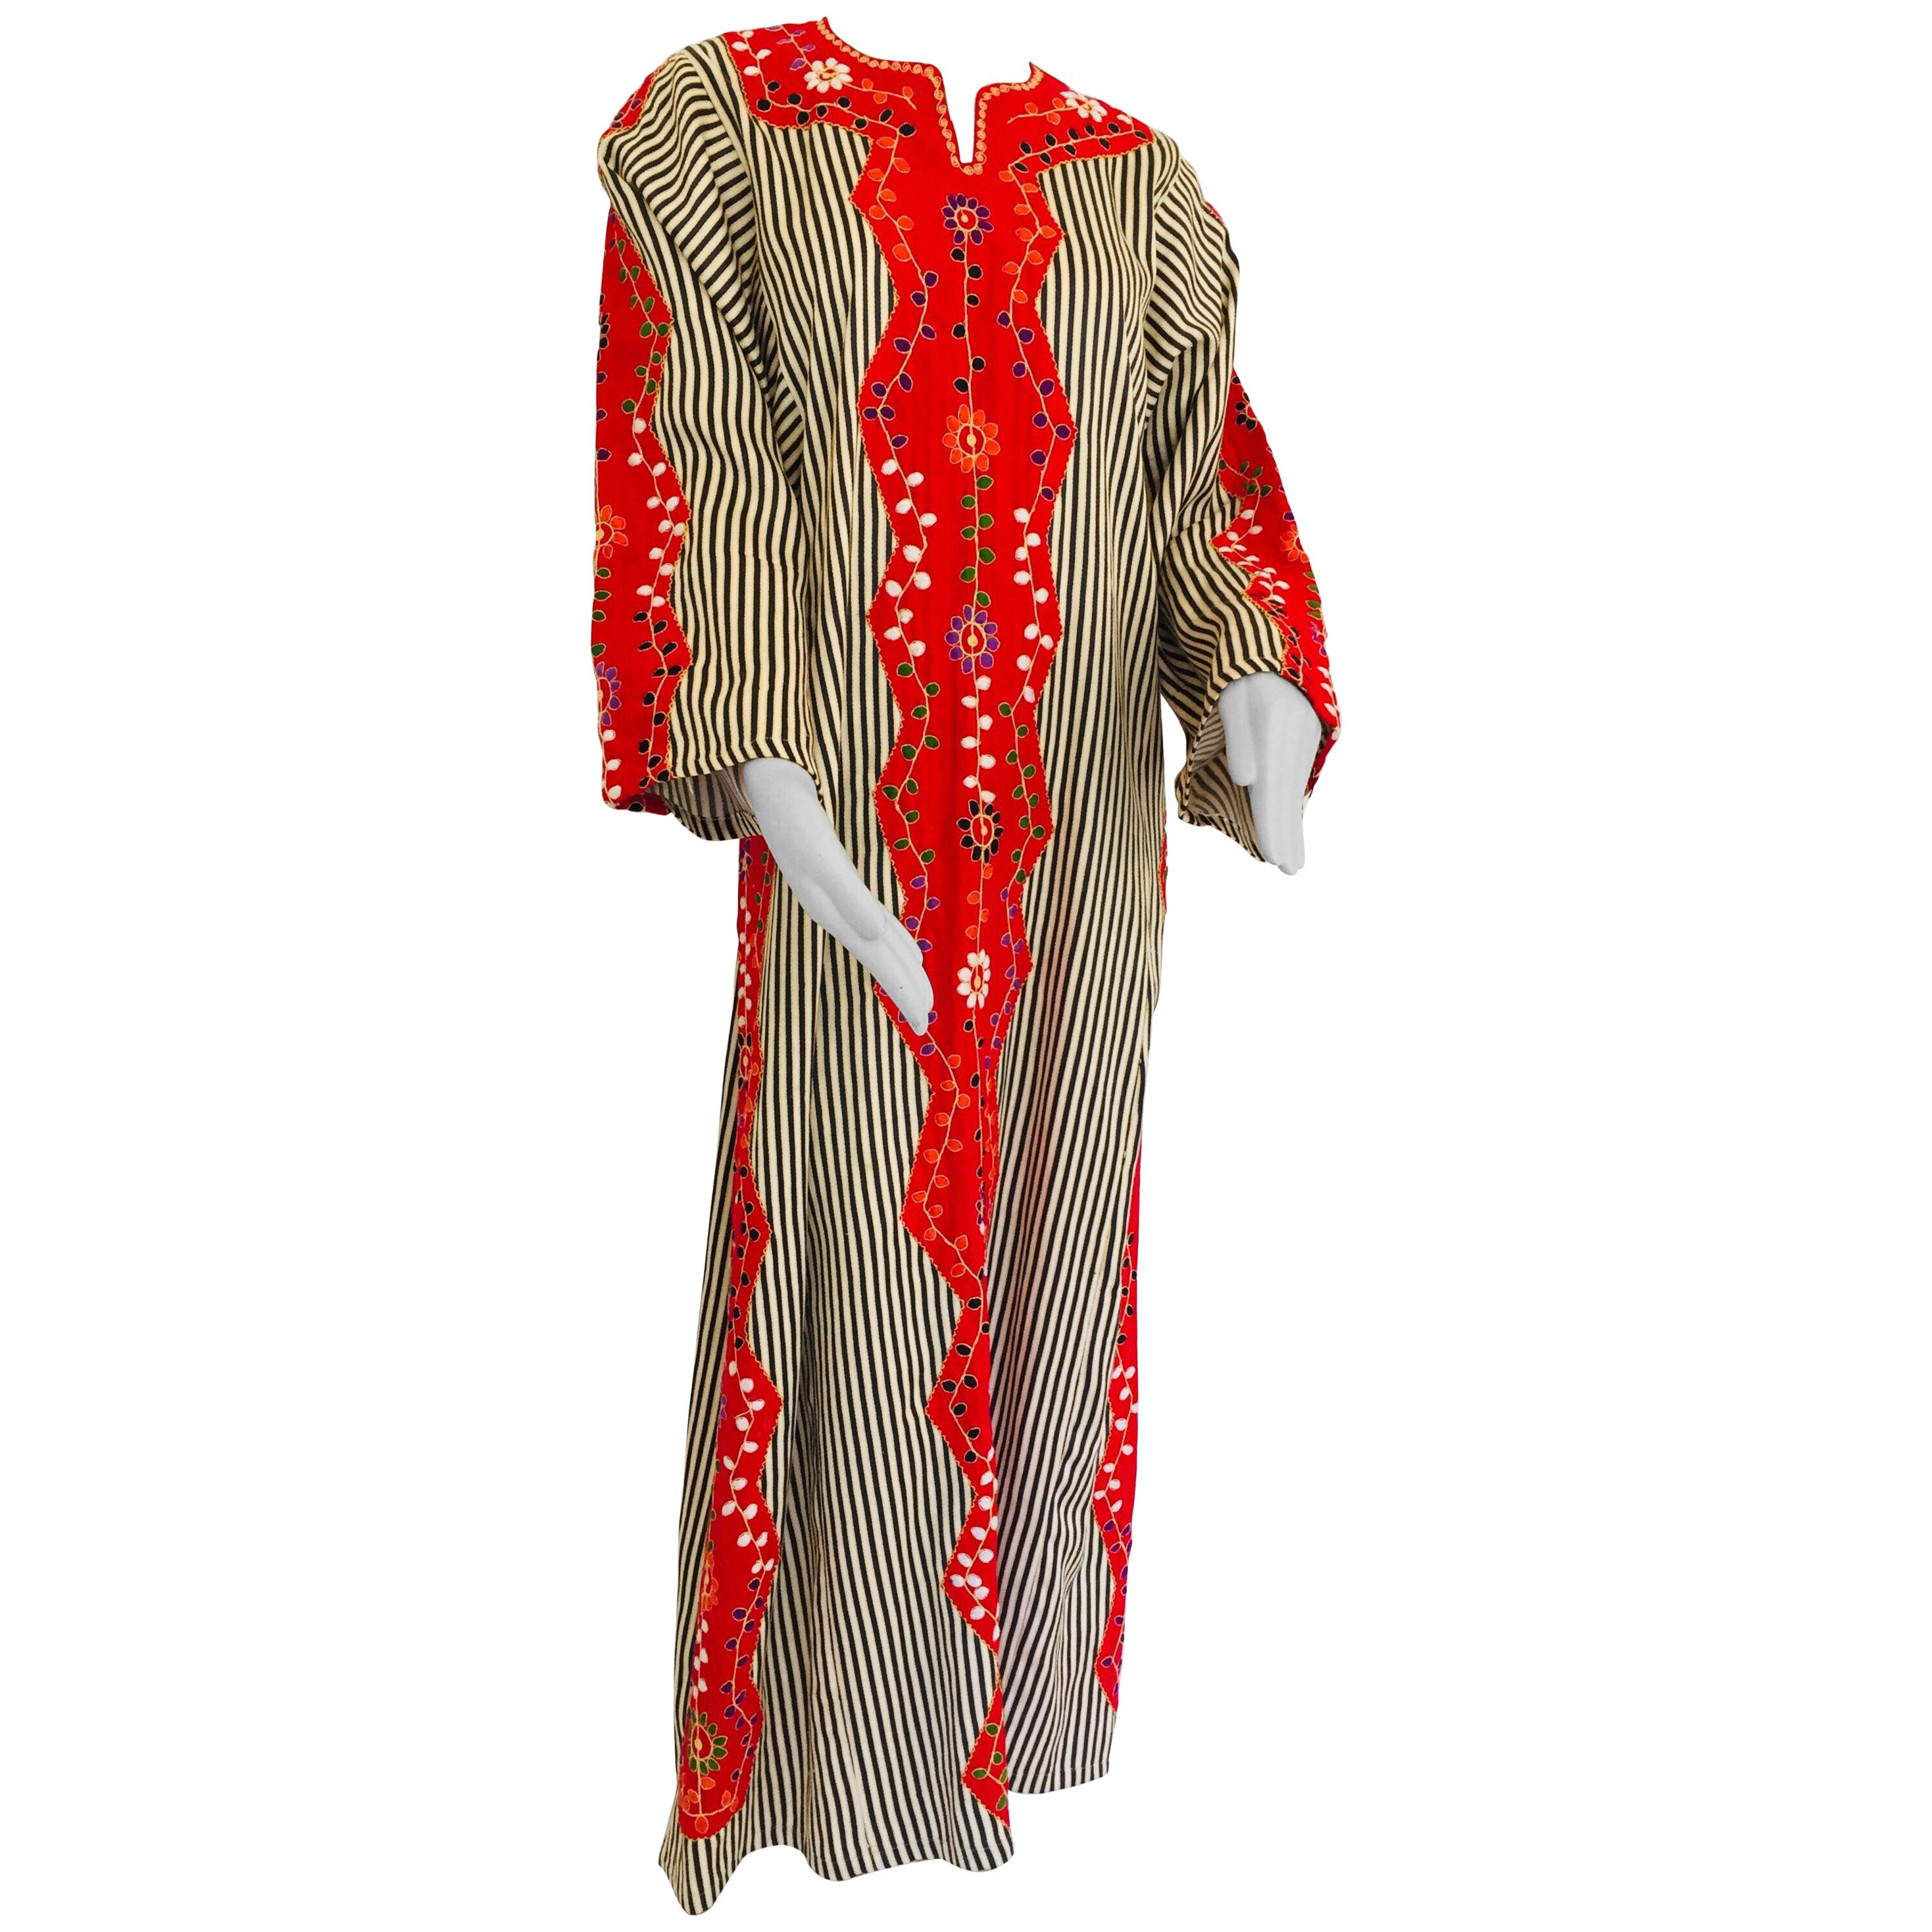 Vintage Middle Eastern Ethnic Caftan Moroccan Kaftan Maxi Dress